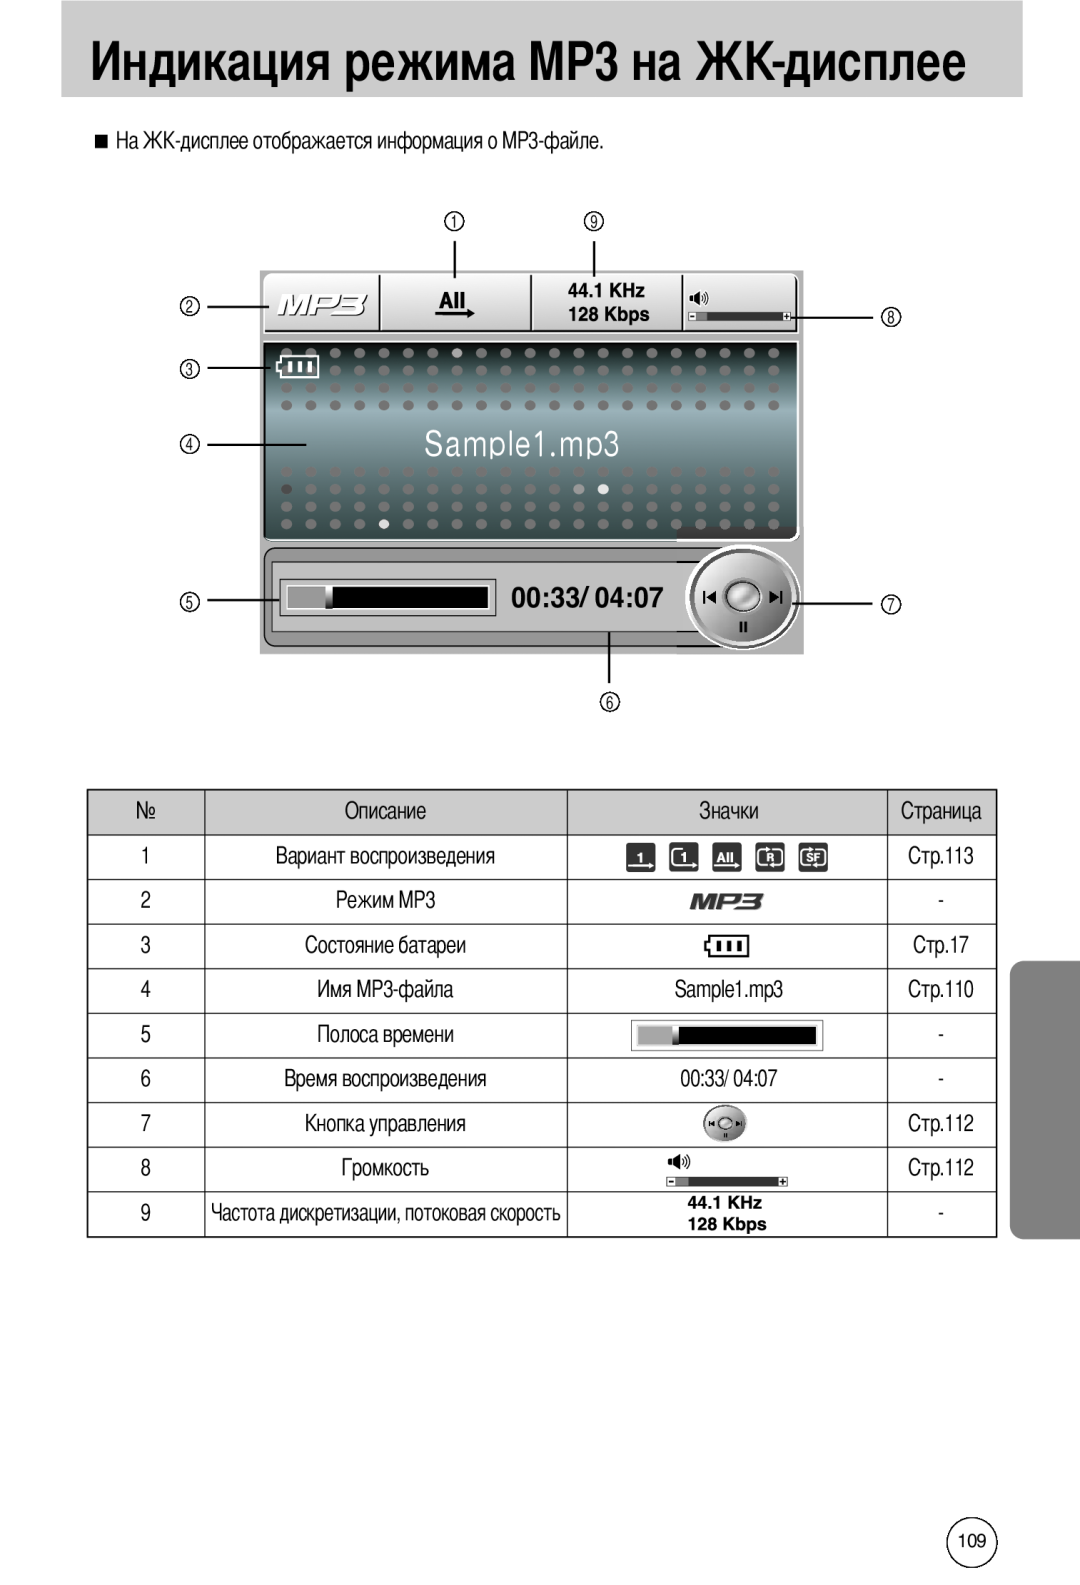 Samsung EC-I50ZZRBA/E1 manual дисплее, 2 MP3, 4 MP3-файла, времени, управления, 4Sample1.mp3, 5 0033, Описание, батареи 